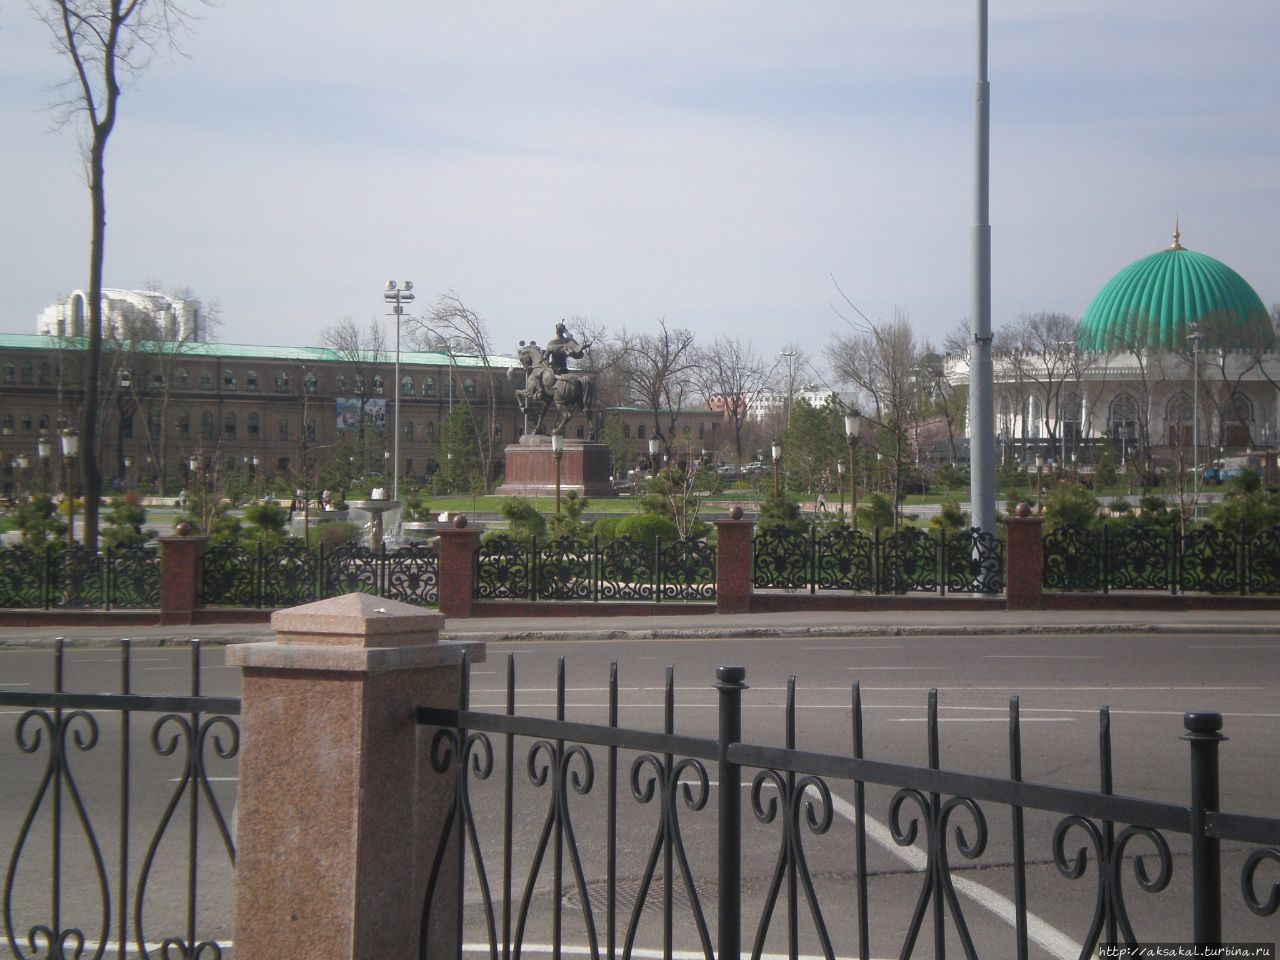 Сквер осиротел без столетних чинар и дубов. Ташкент, Узбекистан